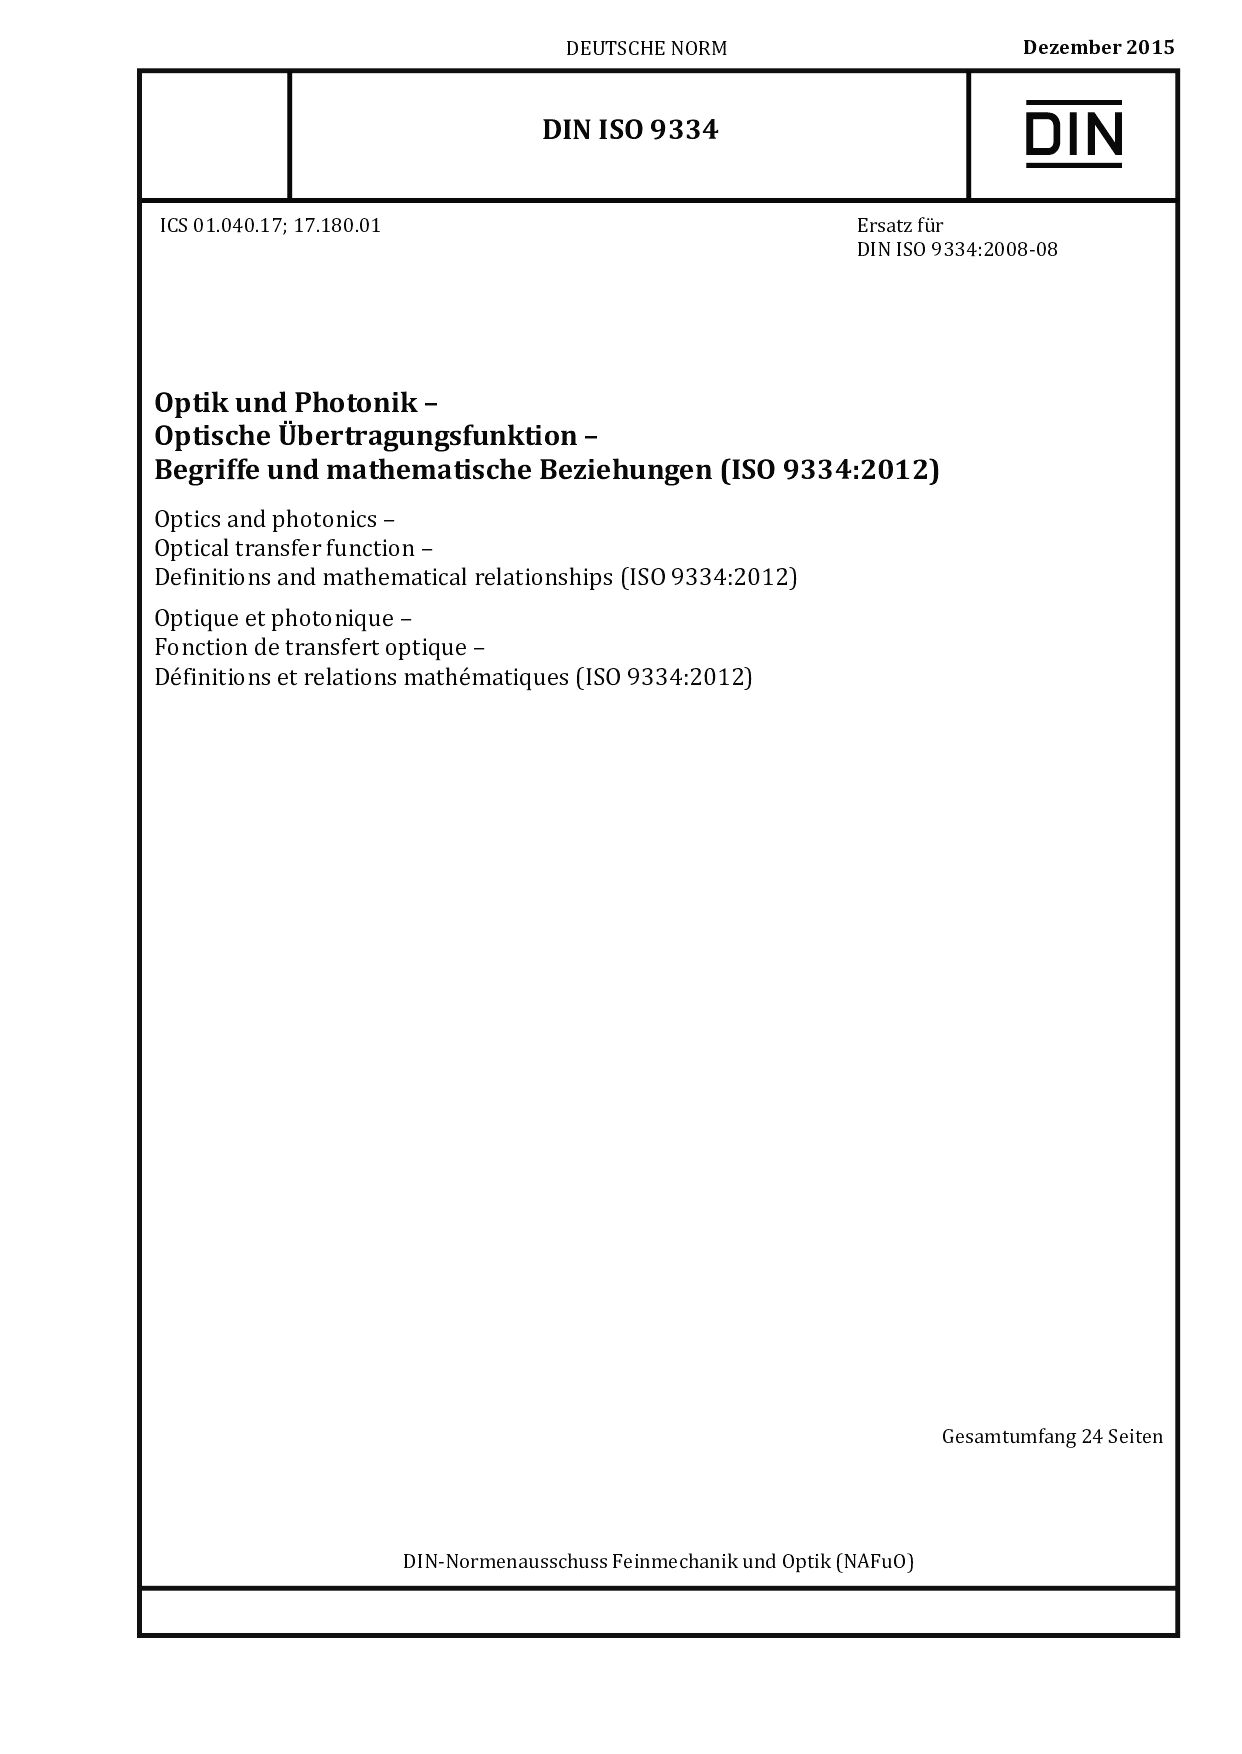 DIN ISO 9334:2015-12